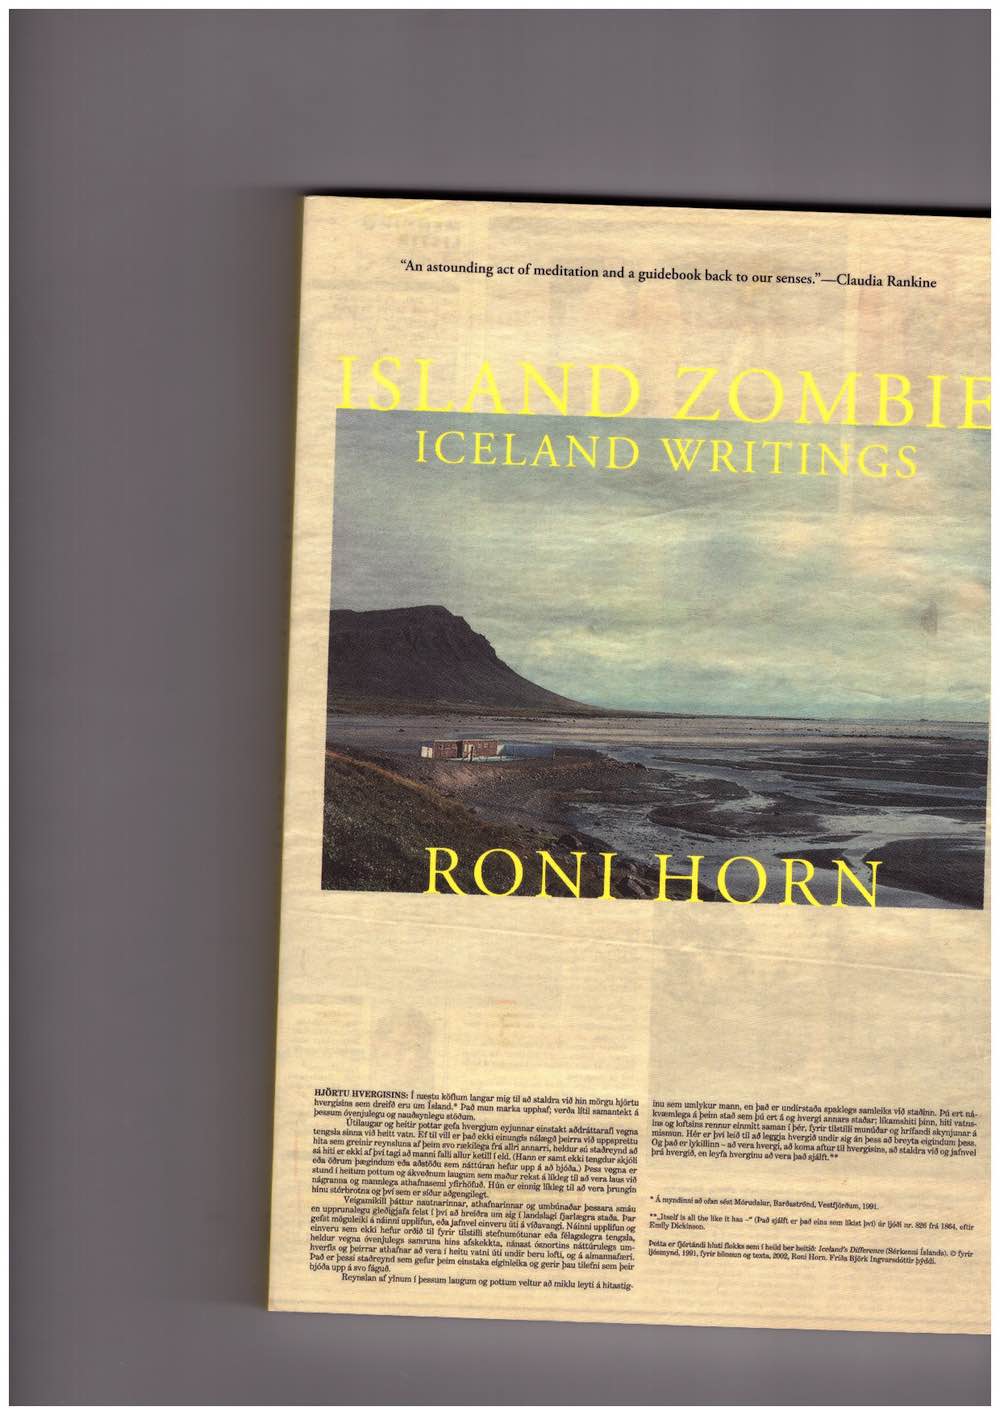 HORN, Roni - Island Zombie: Iceland Writings